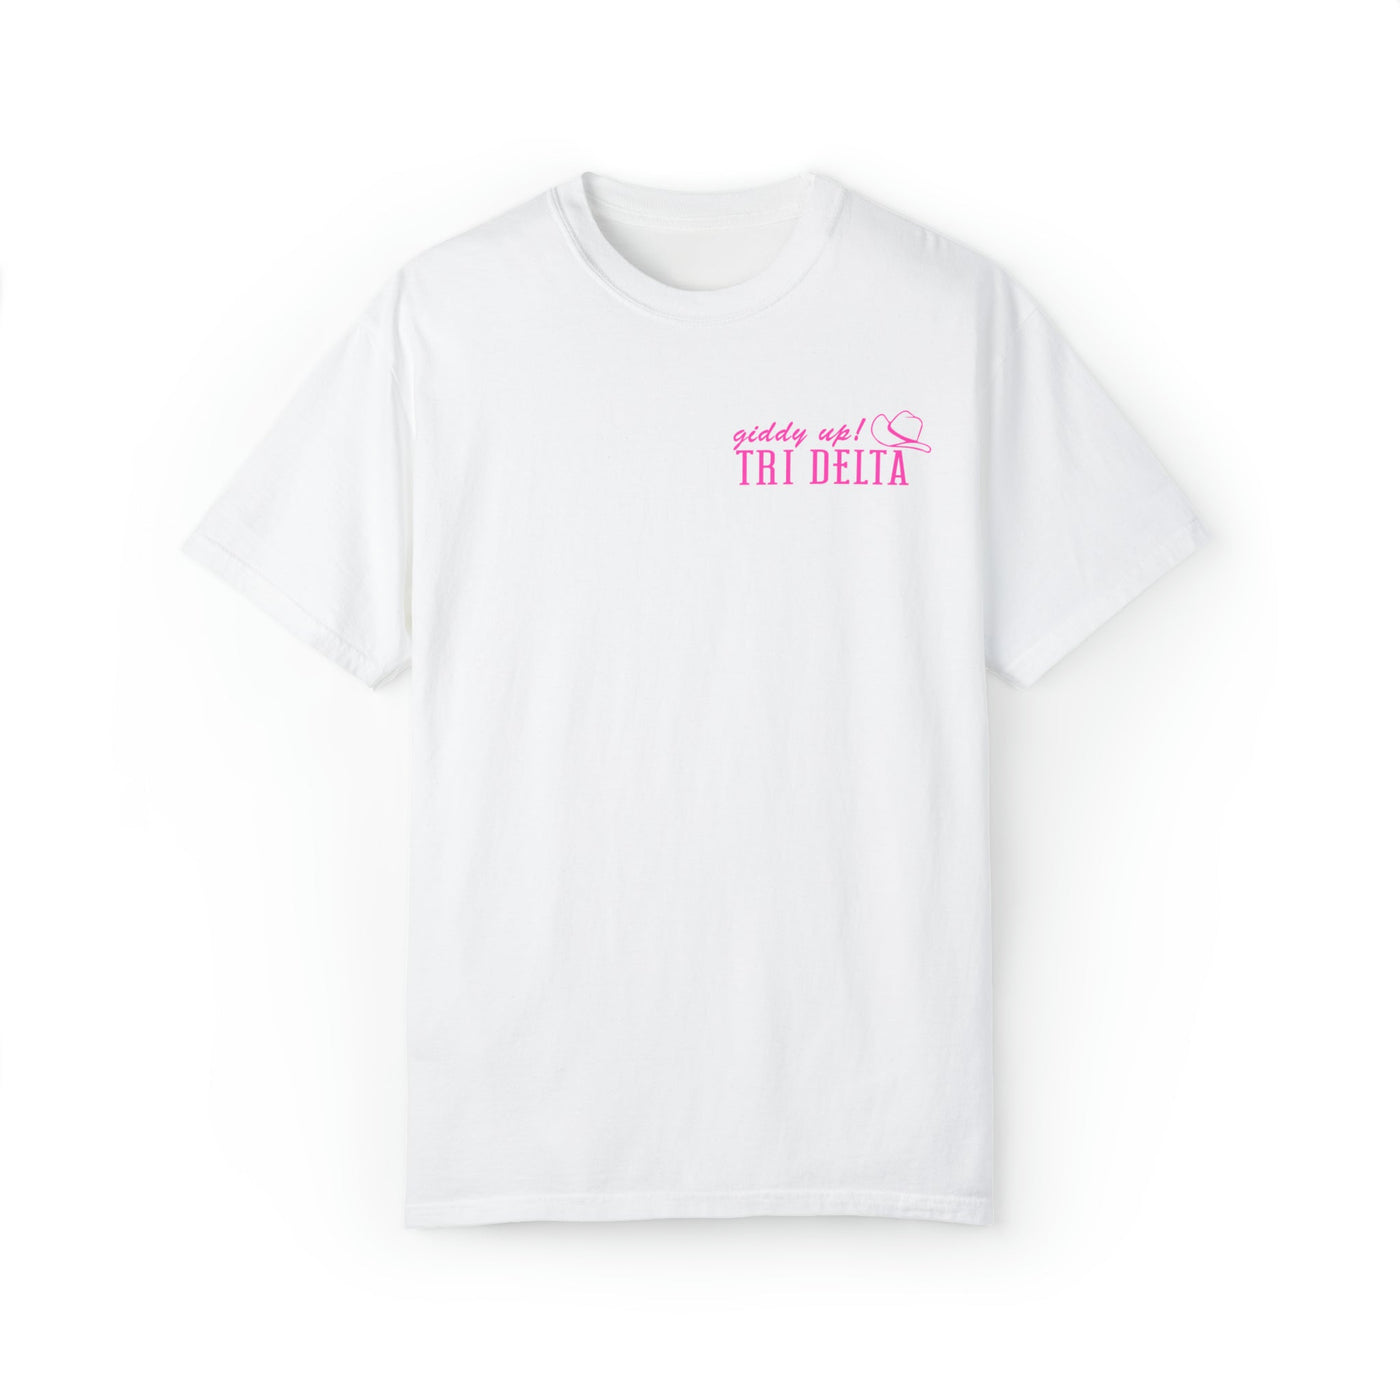 Delta Delta Delta Country Western Pink Sorority T-shirt